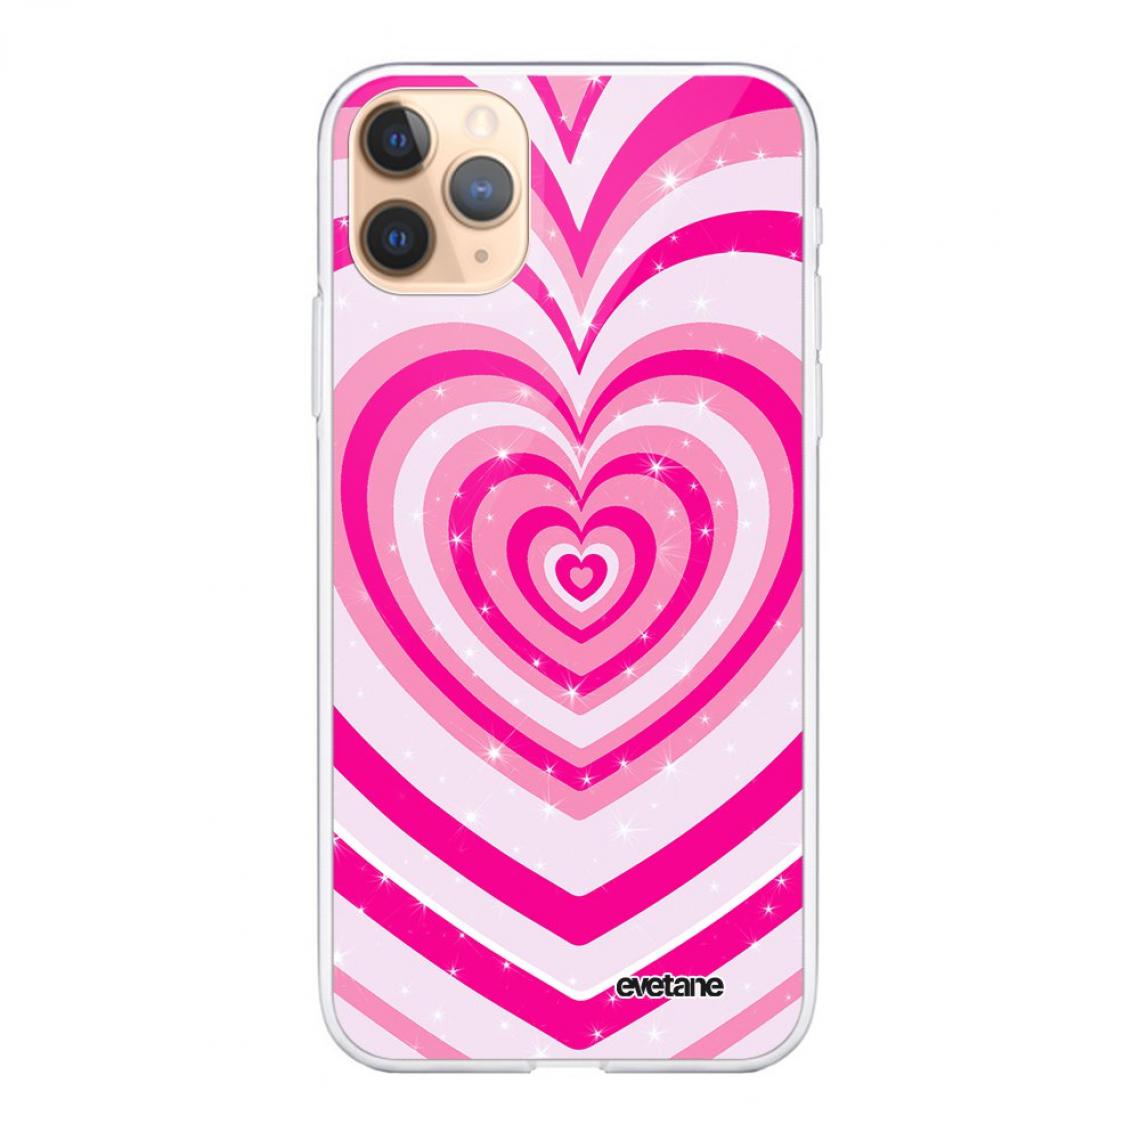 Evetane - Coque iPhone 11 Pro Coeur Psychédélique Rose souple silicone transparente - Coque, étui smartphone